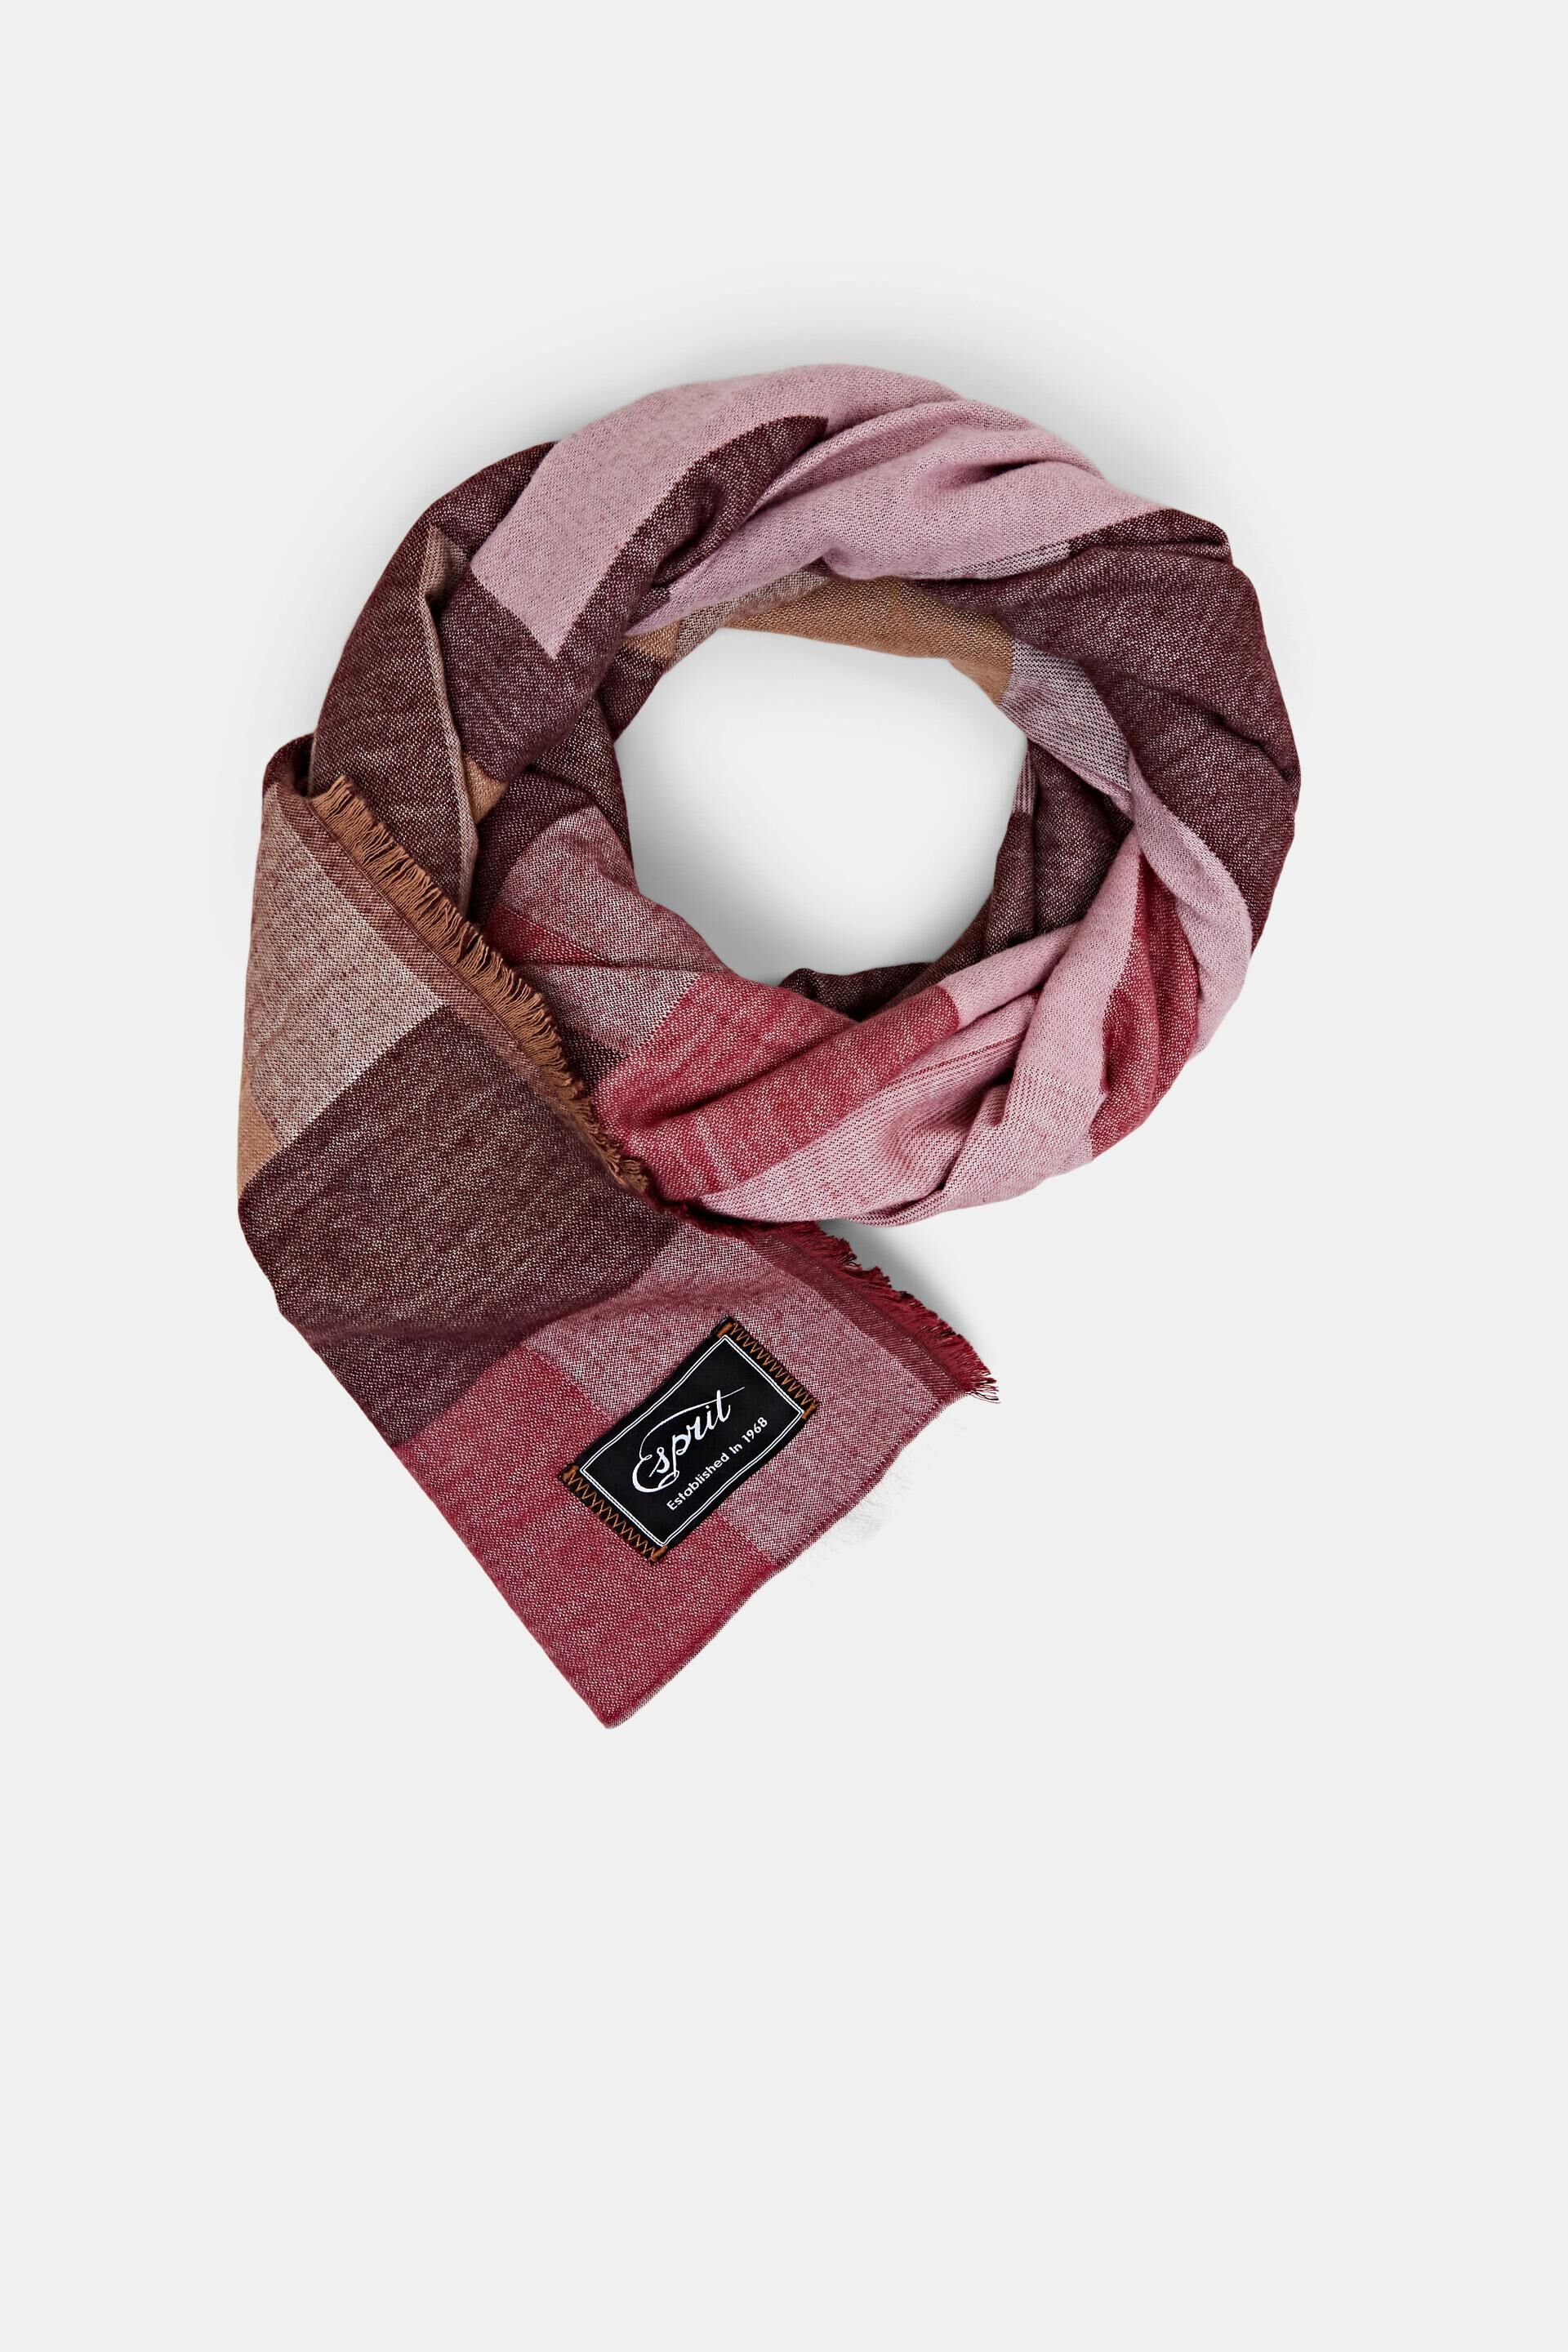 Esprit Online Store Multi-coloured scarf, LENZING™ ECOVERO™